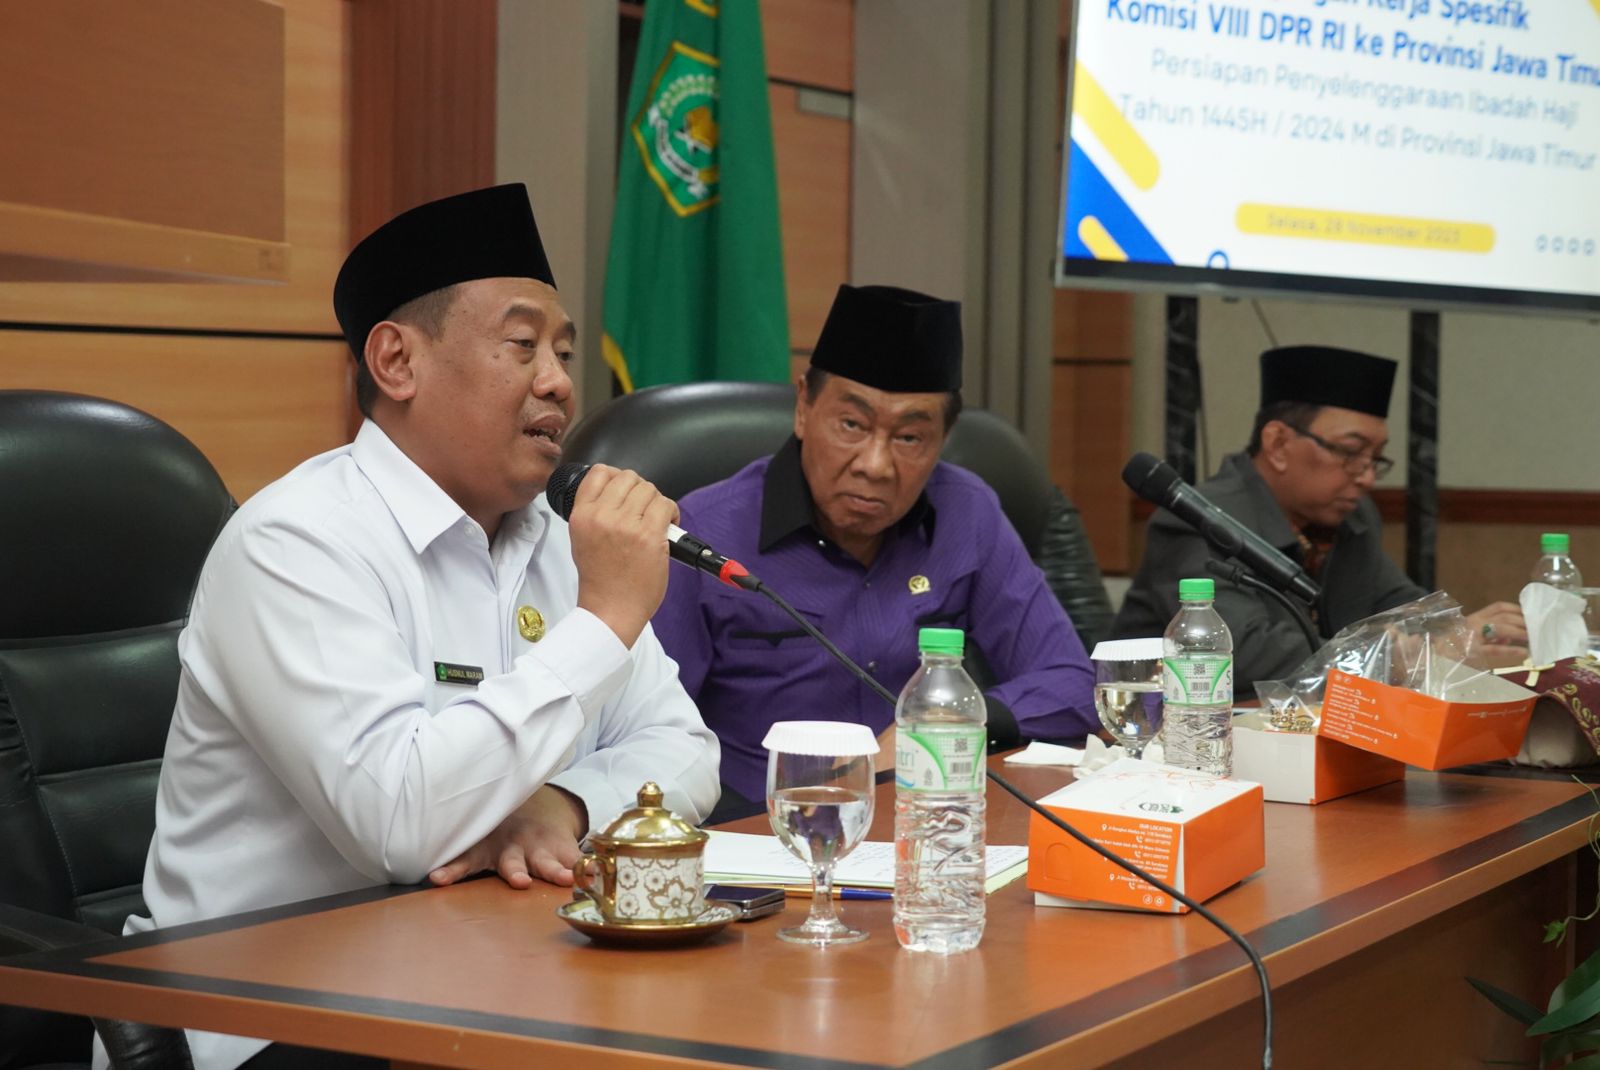 Komisi VIII Bahas Persiapan Penyelenggaraan Ibadah Haji 2024 Jatim